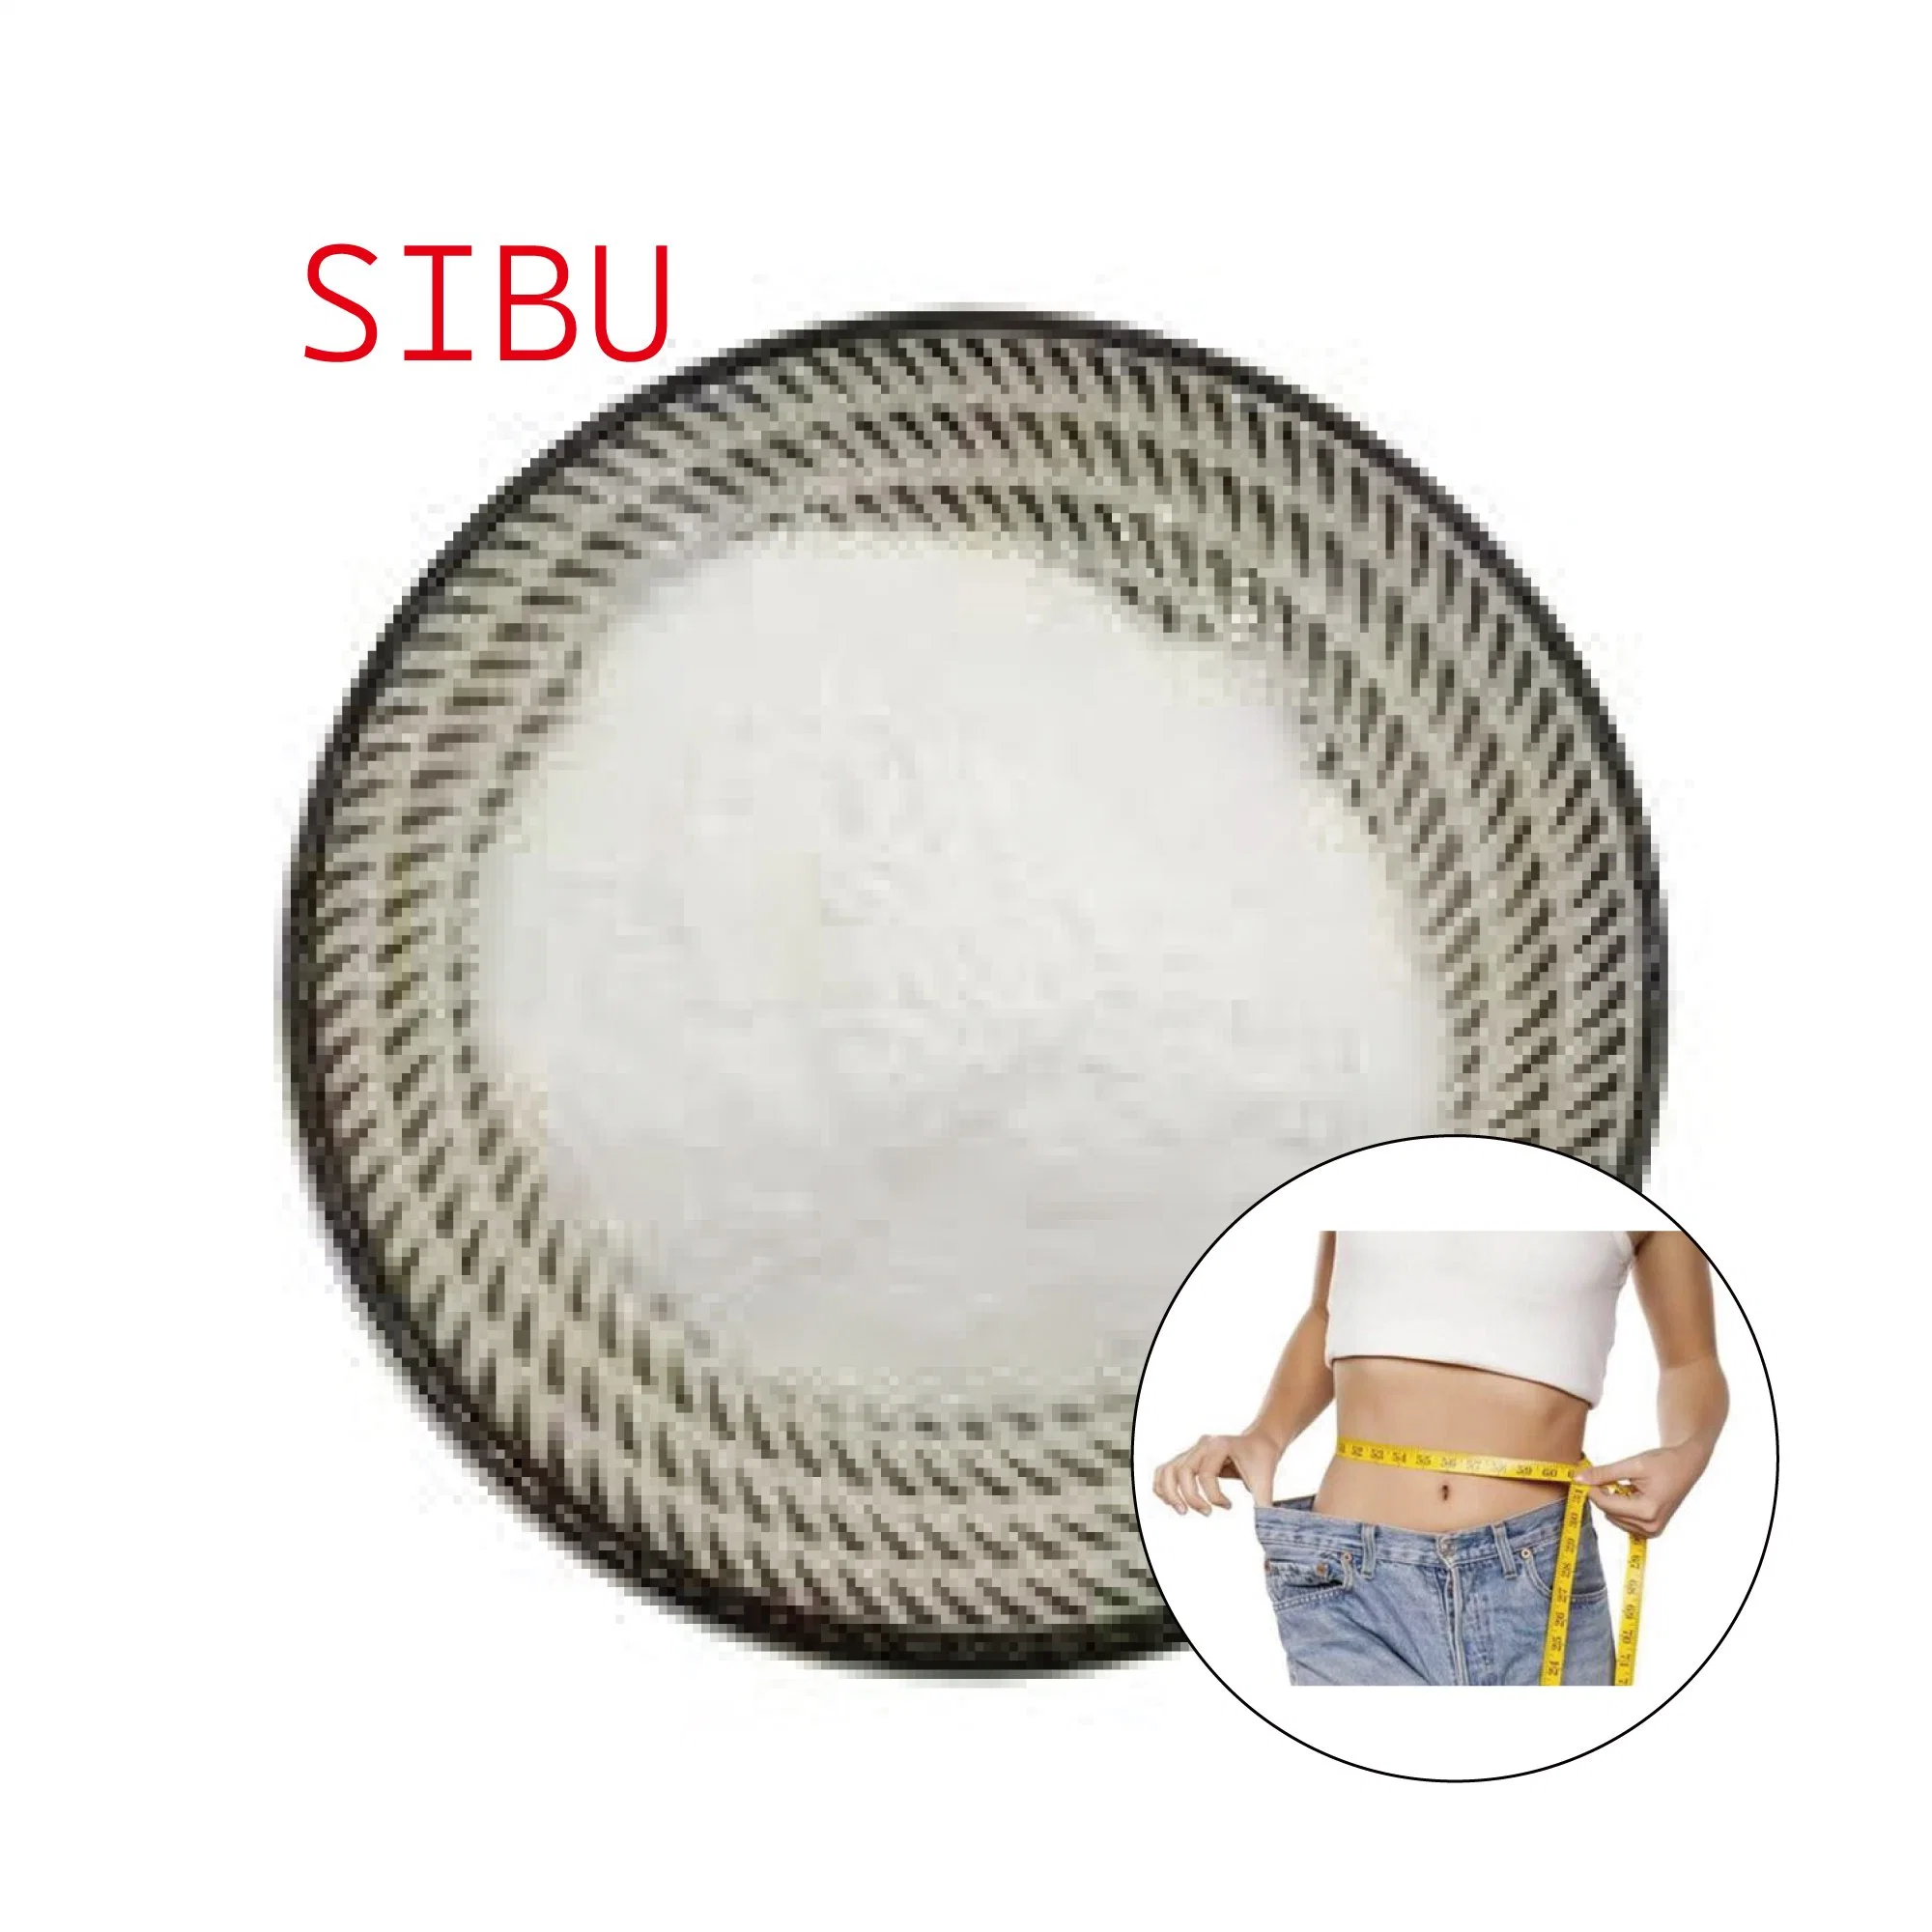 100% Natural Sibu Capsules Fat Burner Beauty Medical Product